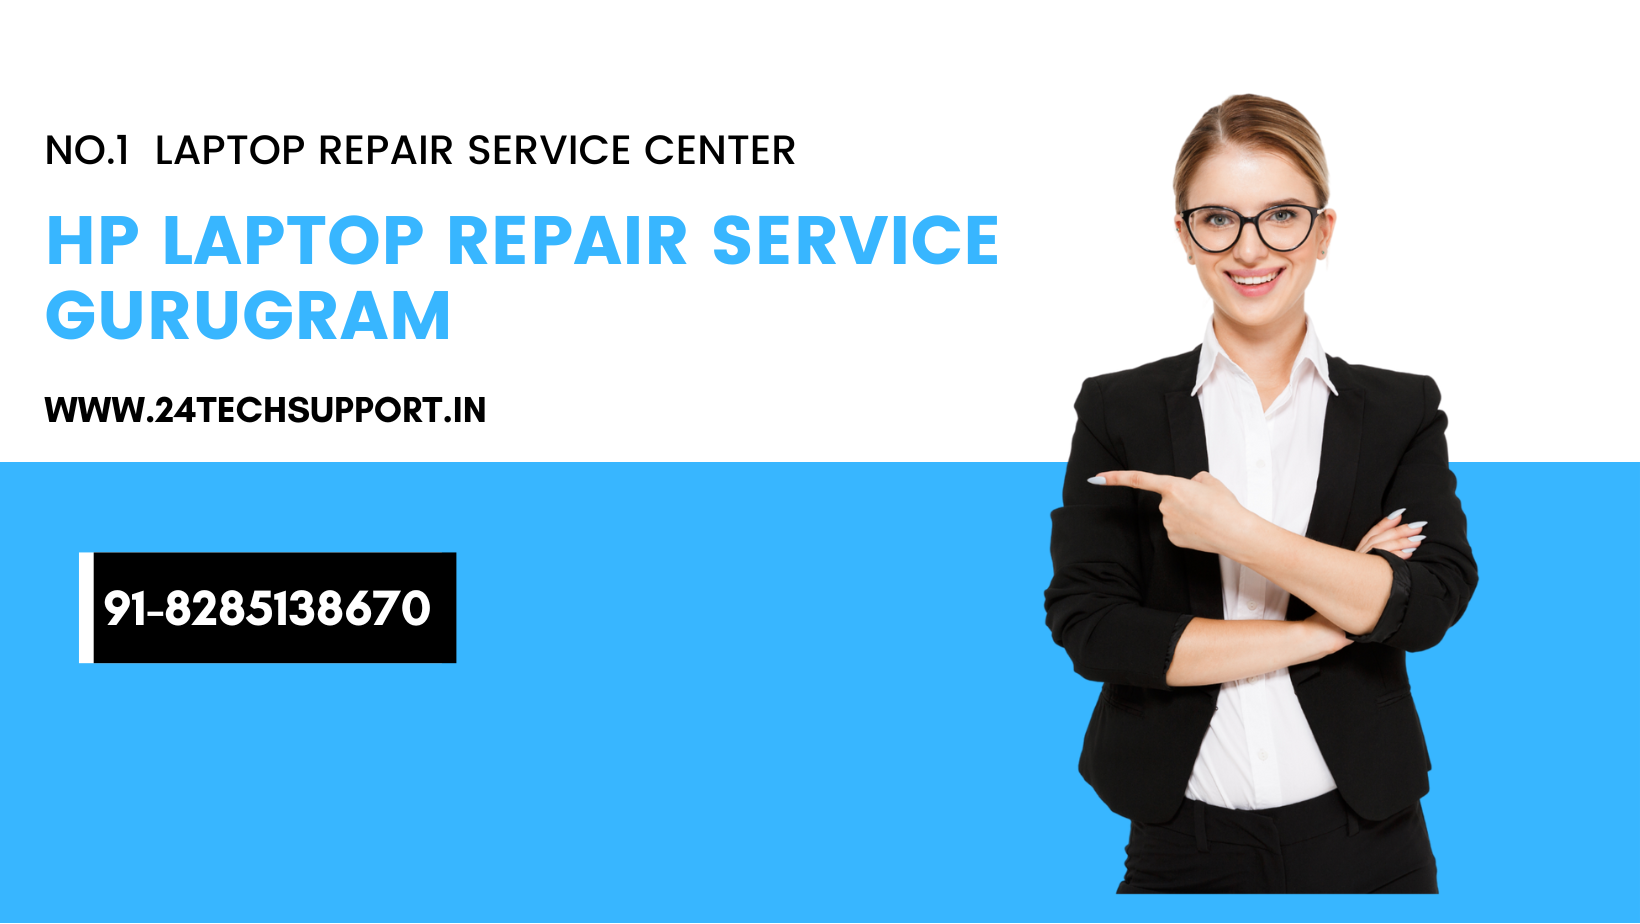 HP laptop repair service center in gurgaon